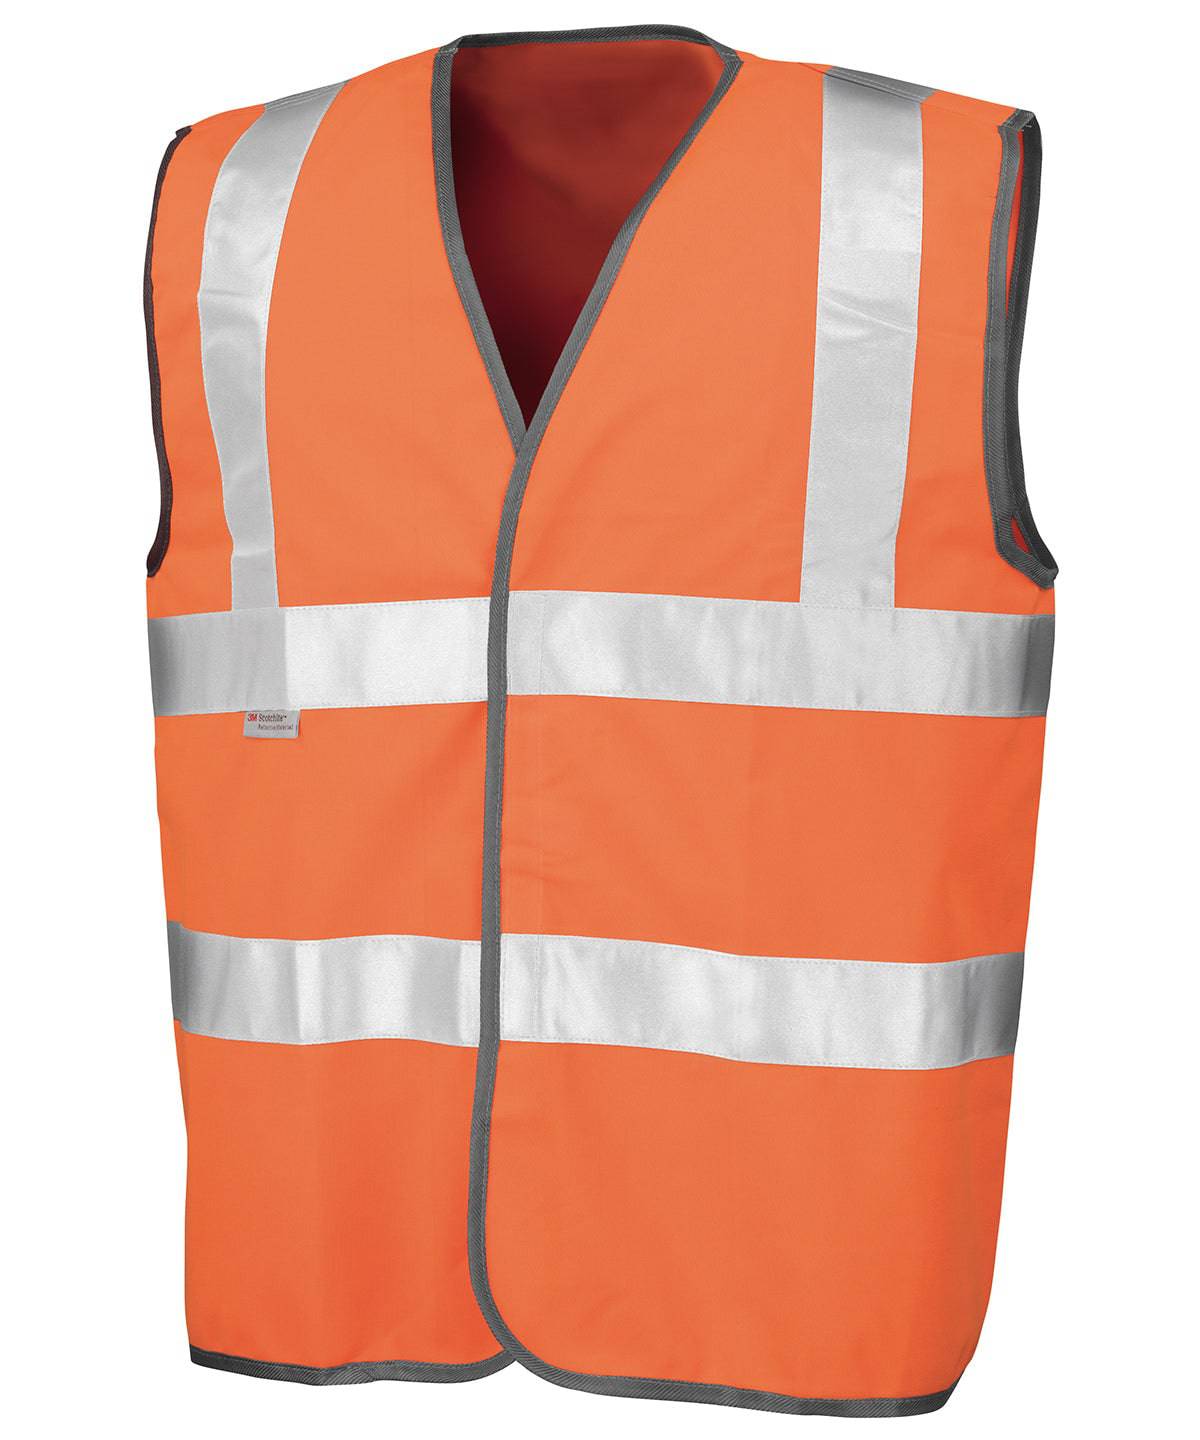 Fluorescent Orange - Safety high-viz vest